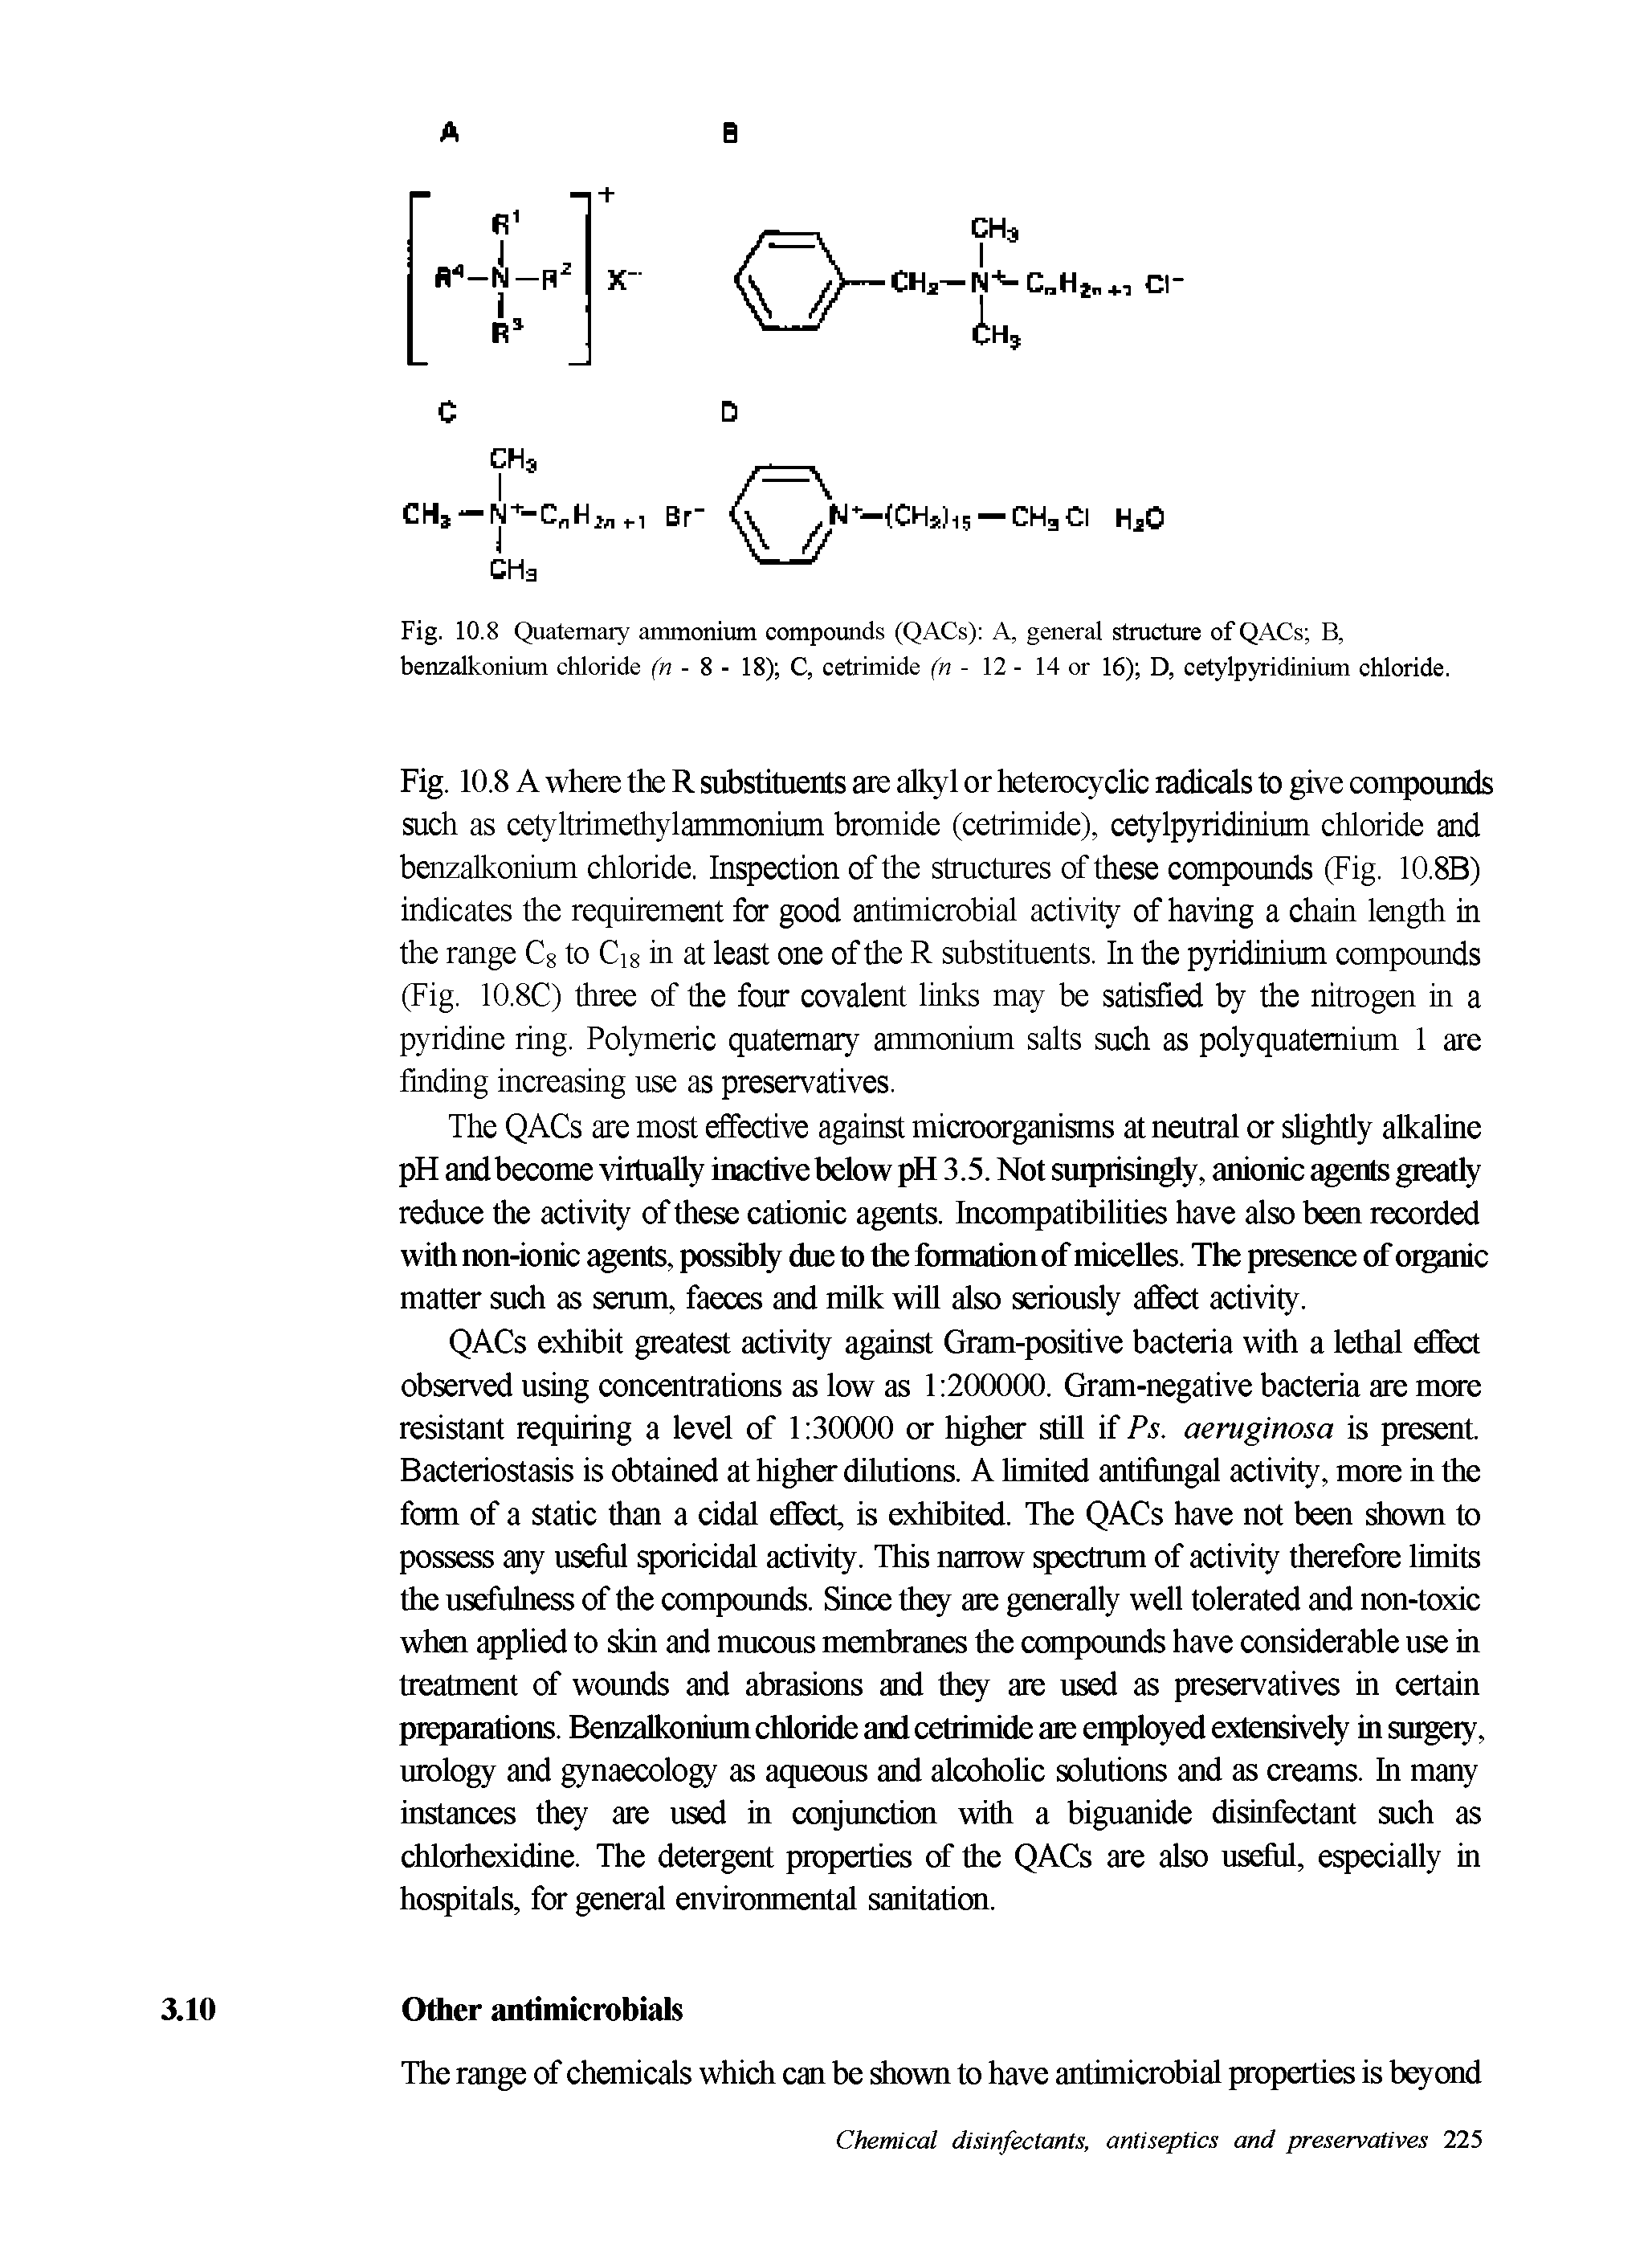 Fig. 10.8 Quaternary ammonium compounds (QACs) A, general structure ofQACs B, benzalkonium chloride (n - S - 18) C, cetrimide (n - 12 - 14 or 16) D, cetylpyridinium chloride.